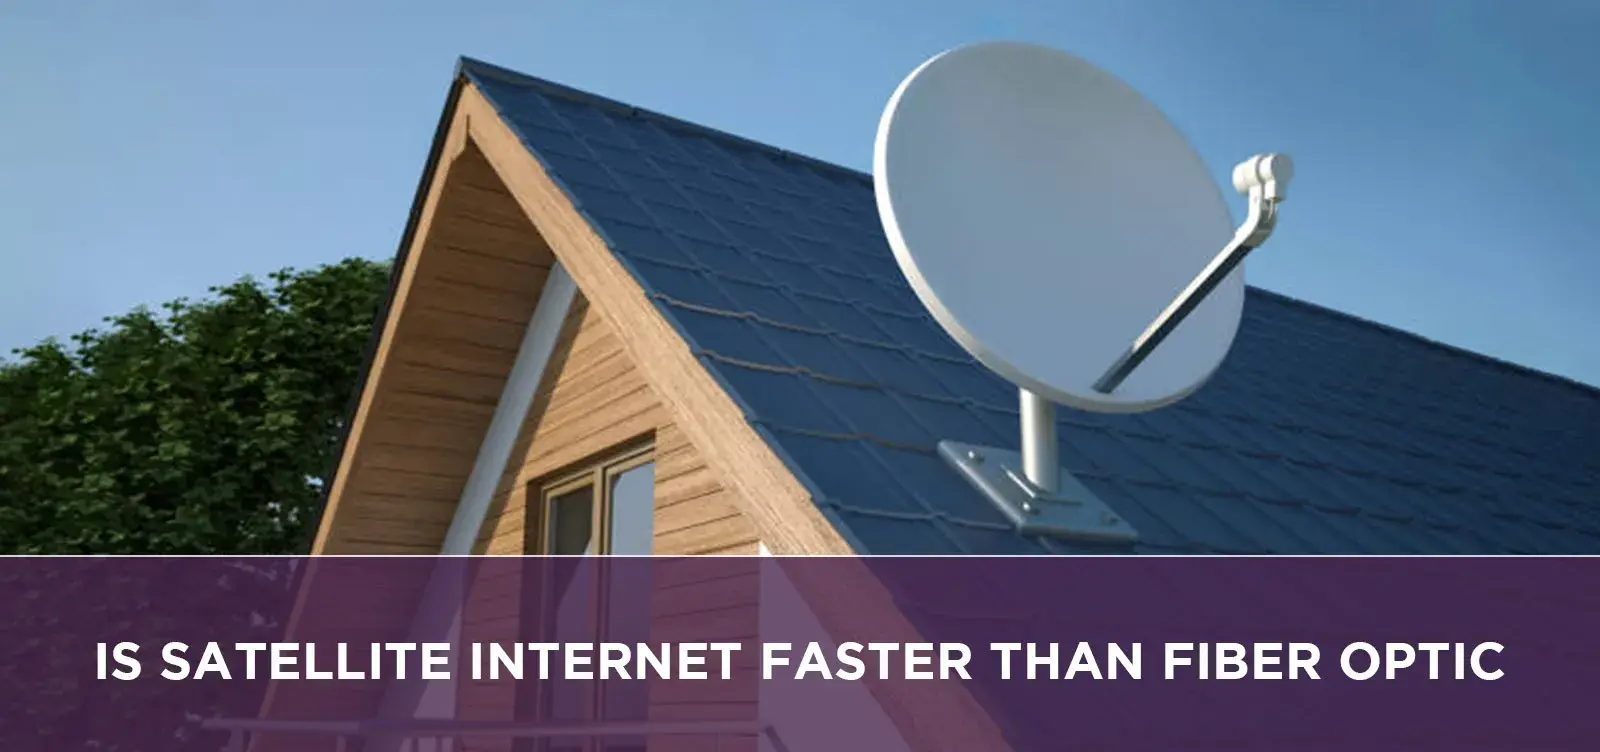 Is Satellite Internet Faster Than Fiber Optic?